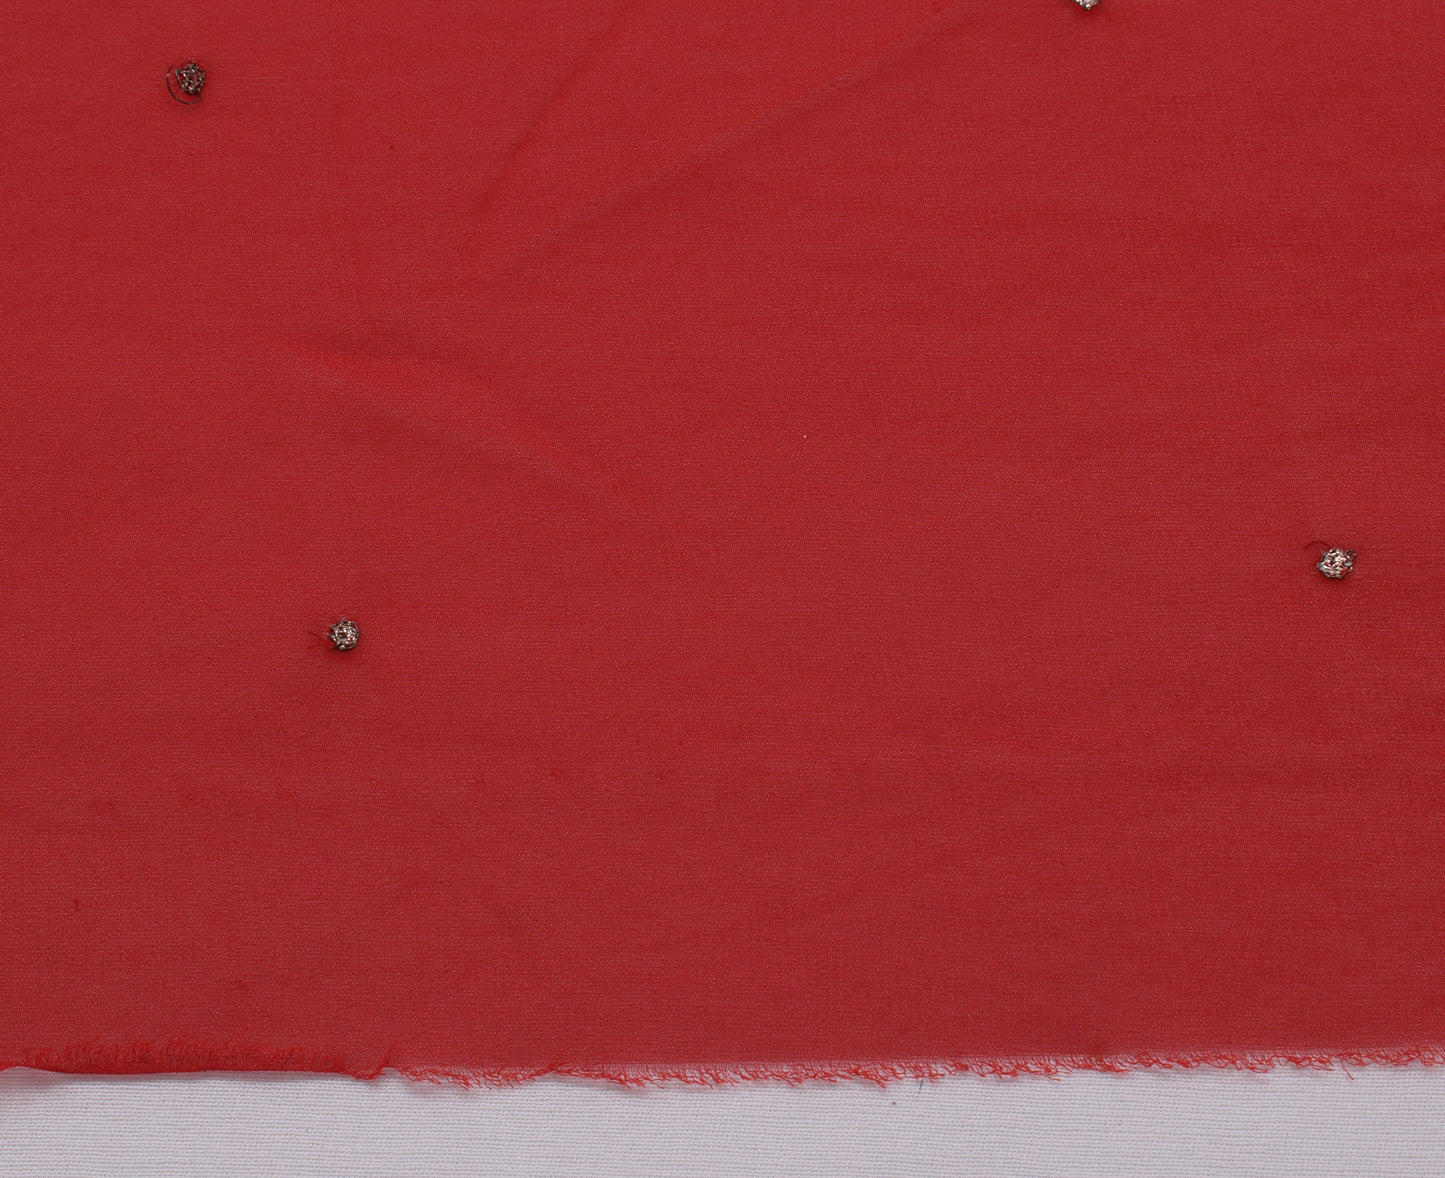 Sushila Vintage Red Georgette Silk Sari Remnant Scrap Multi Purpose Craft Fabric